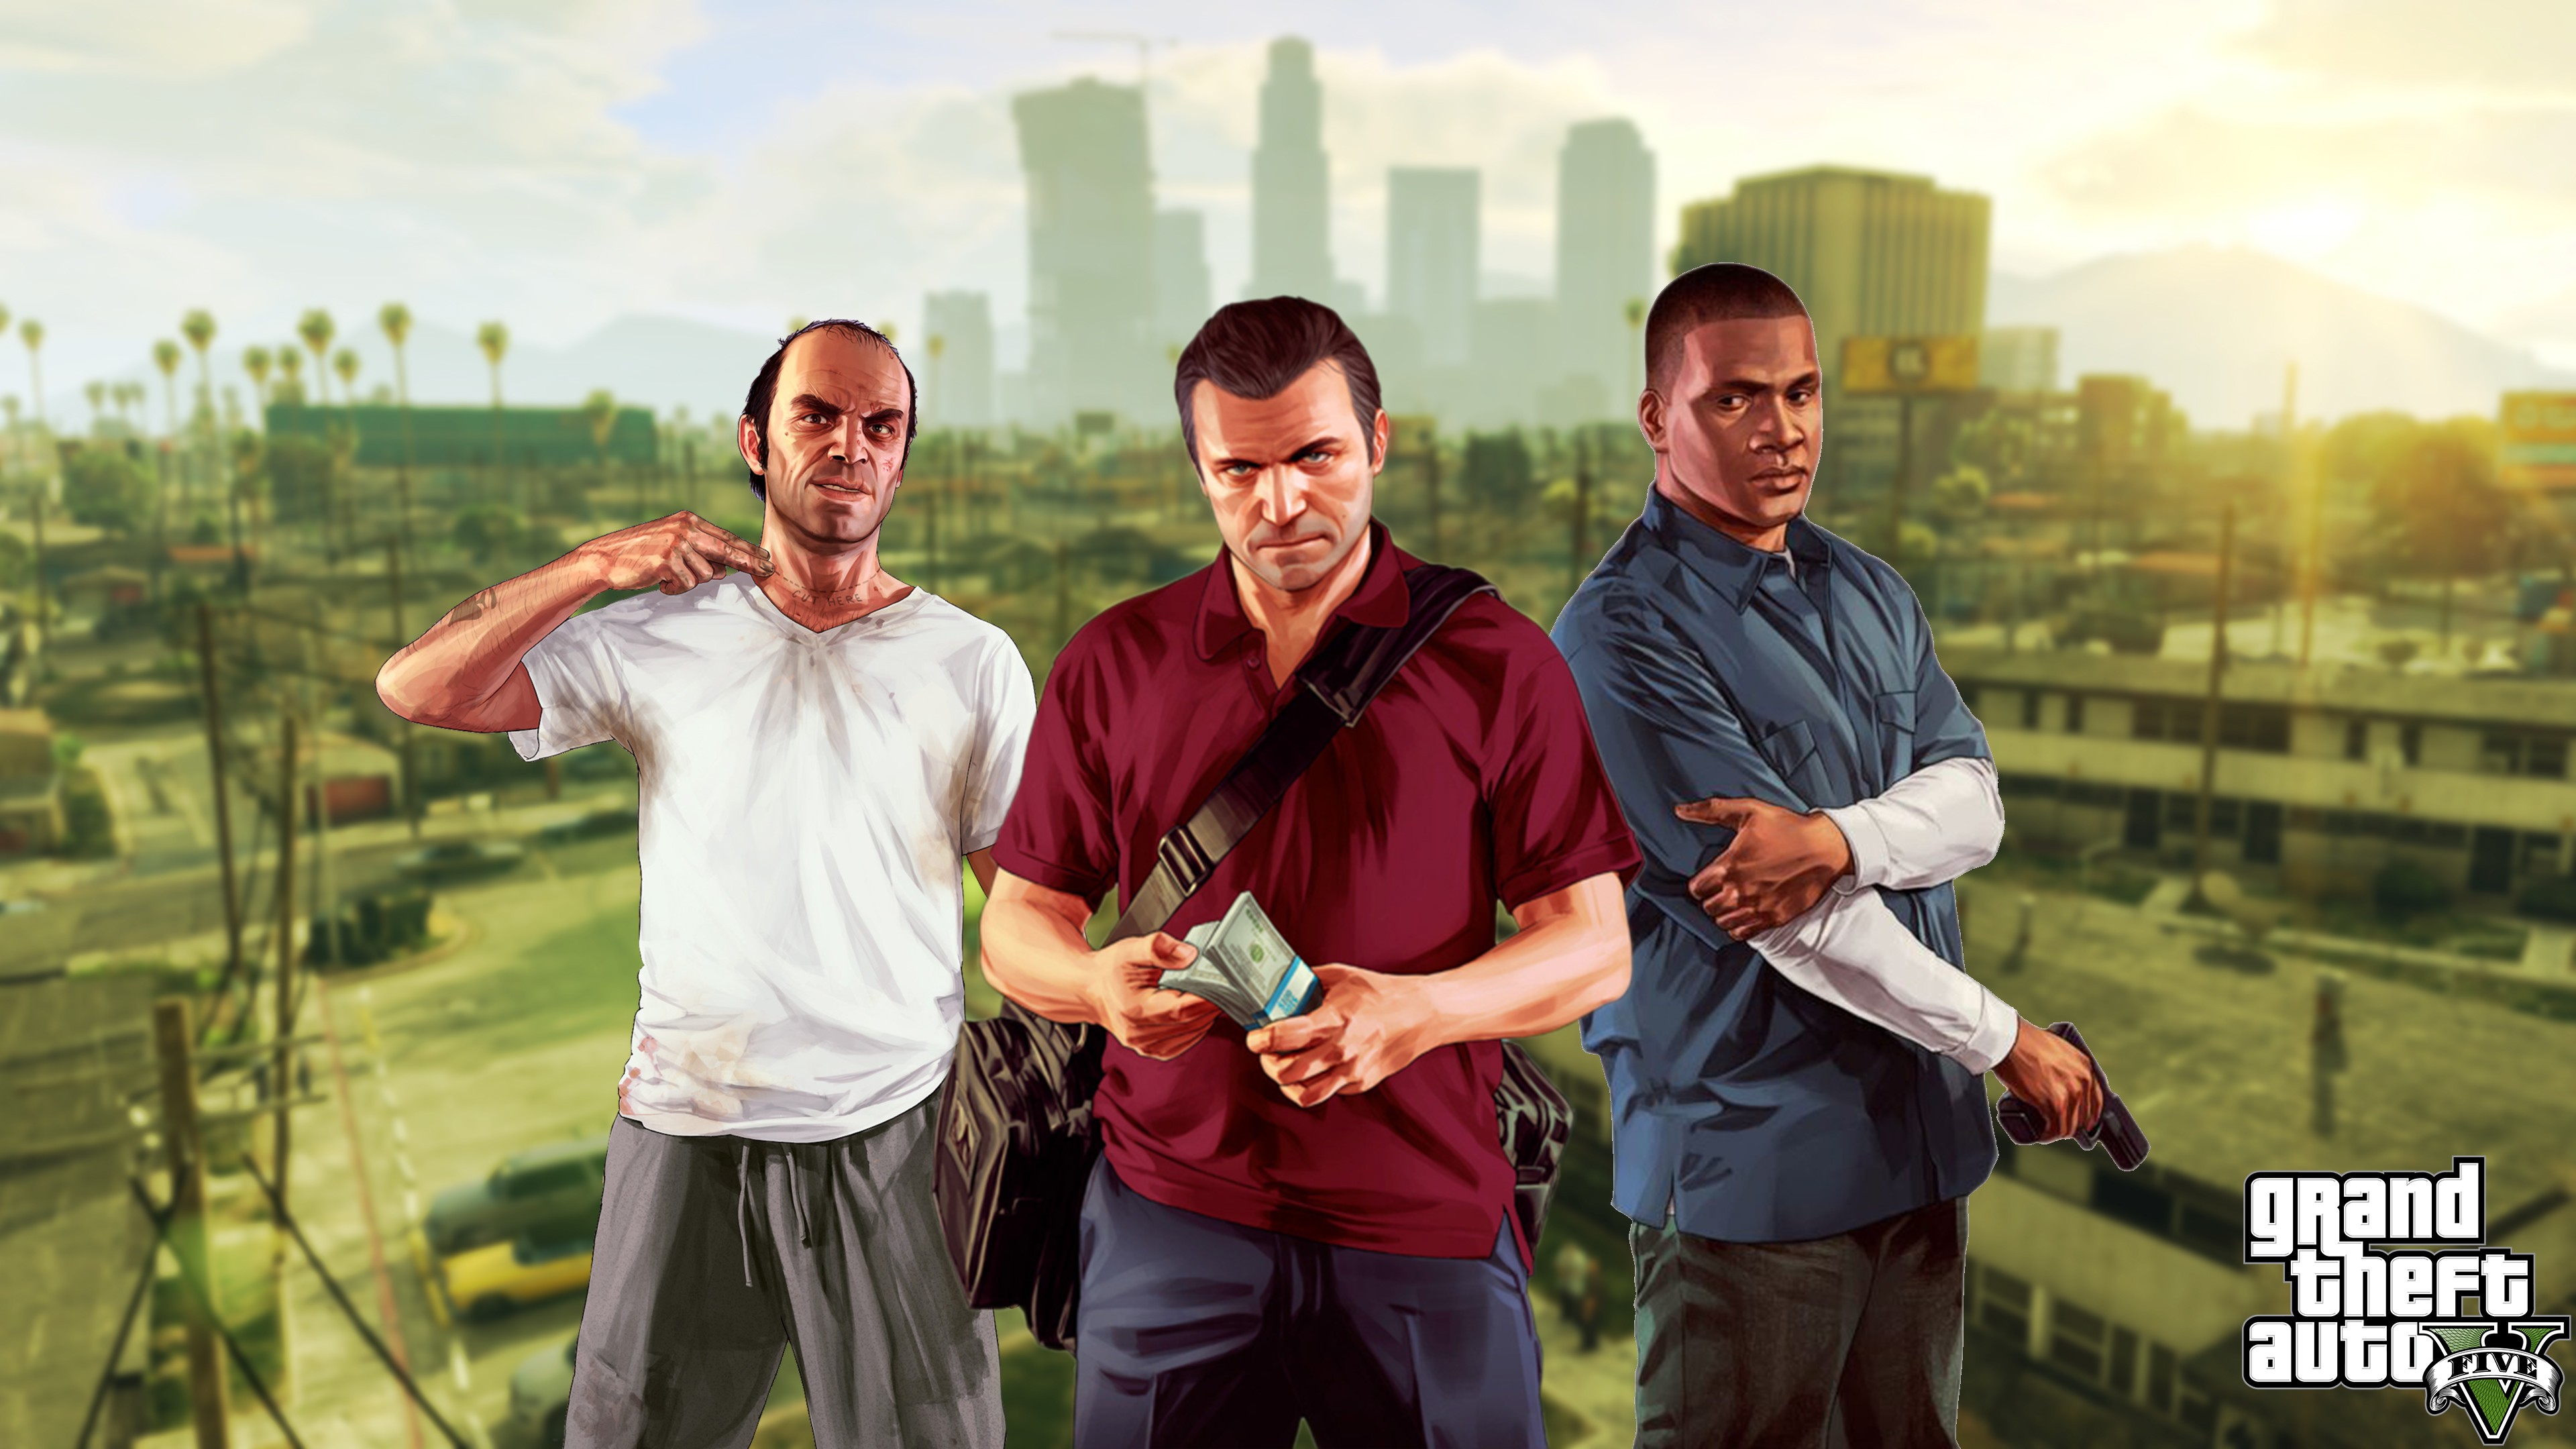 Grand Theft Auto V, Rockstar Games, Digital art, Video games Wallpaper